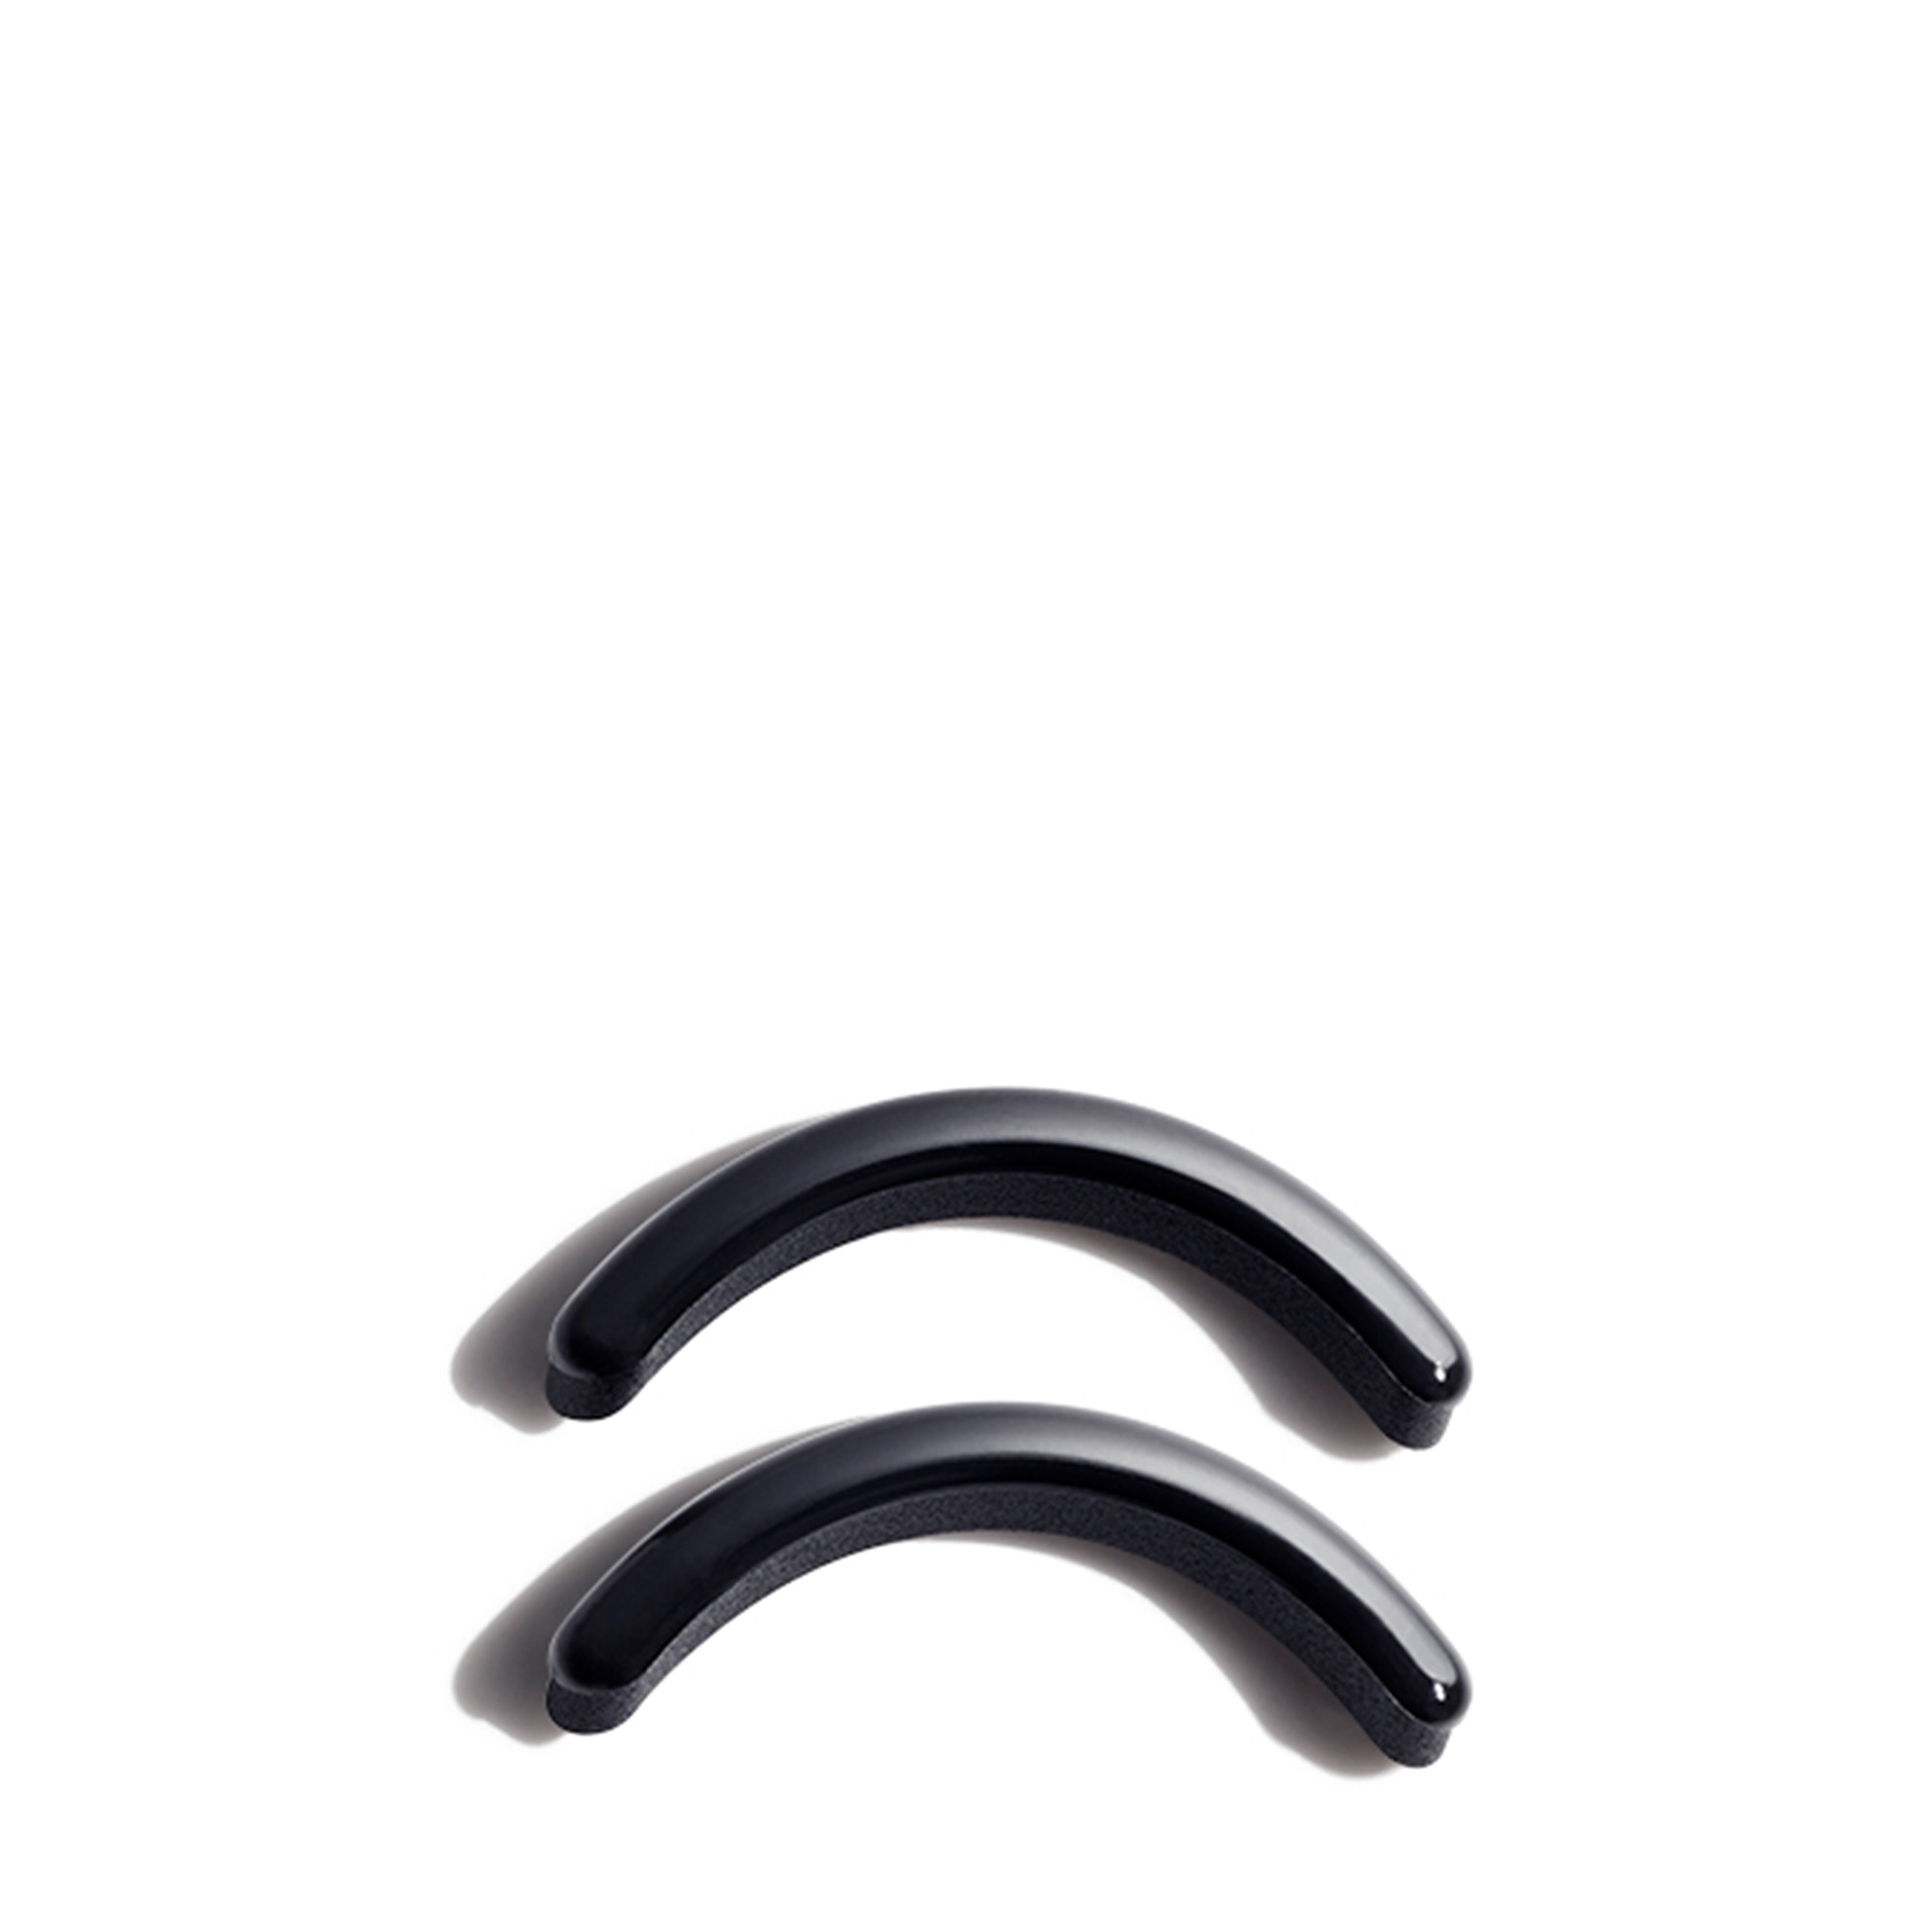 shu uemura eyelash curler replacement pads